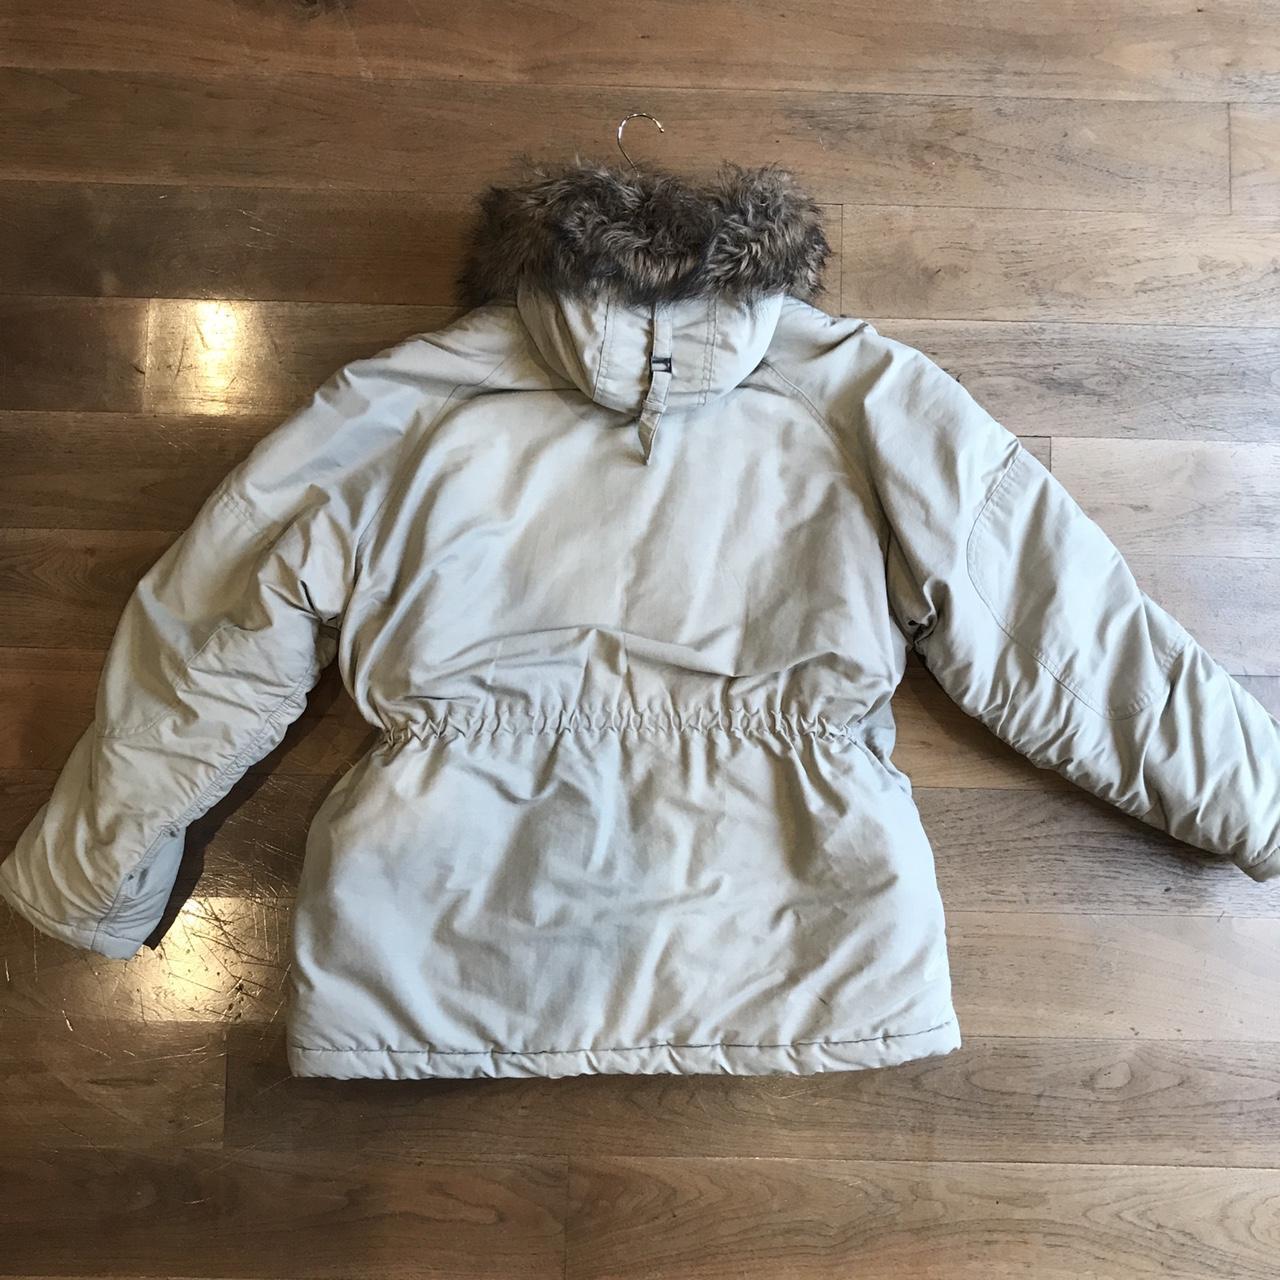 Schott parka jacket N3b extreme cold weather Size... - Depop